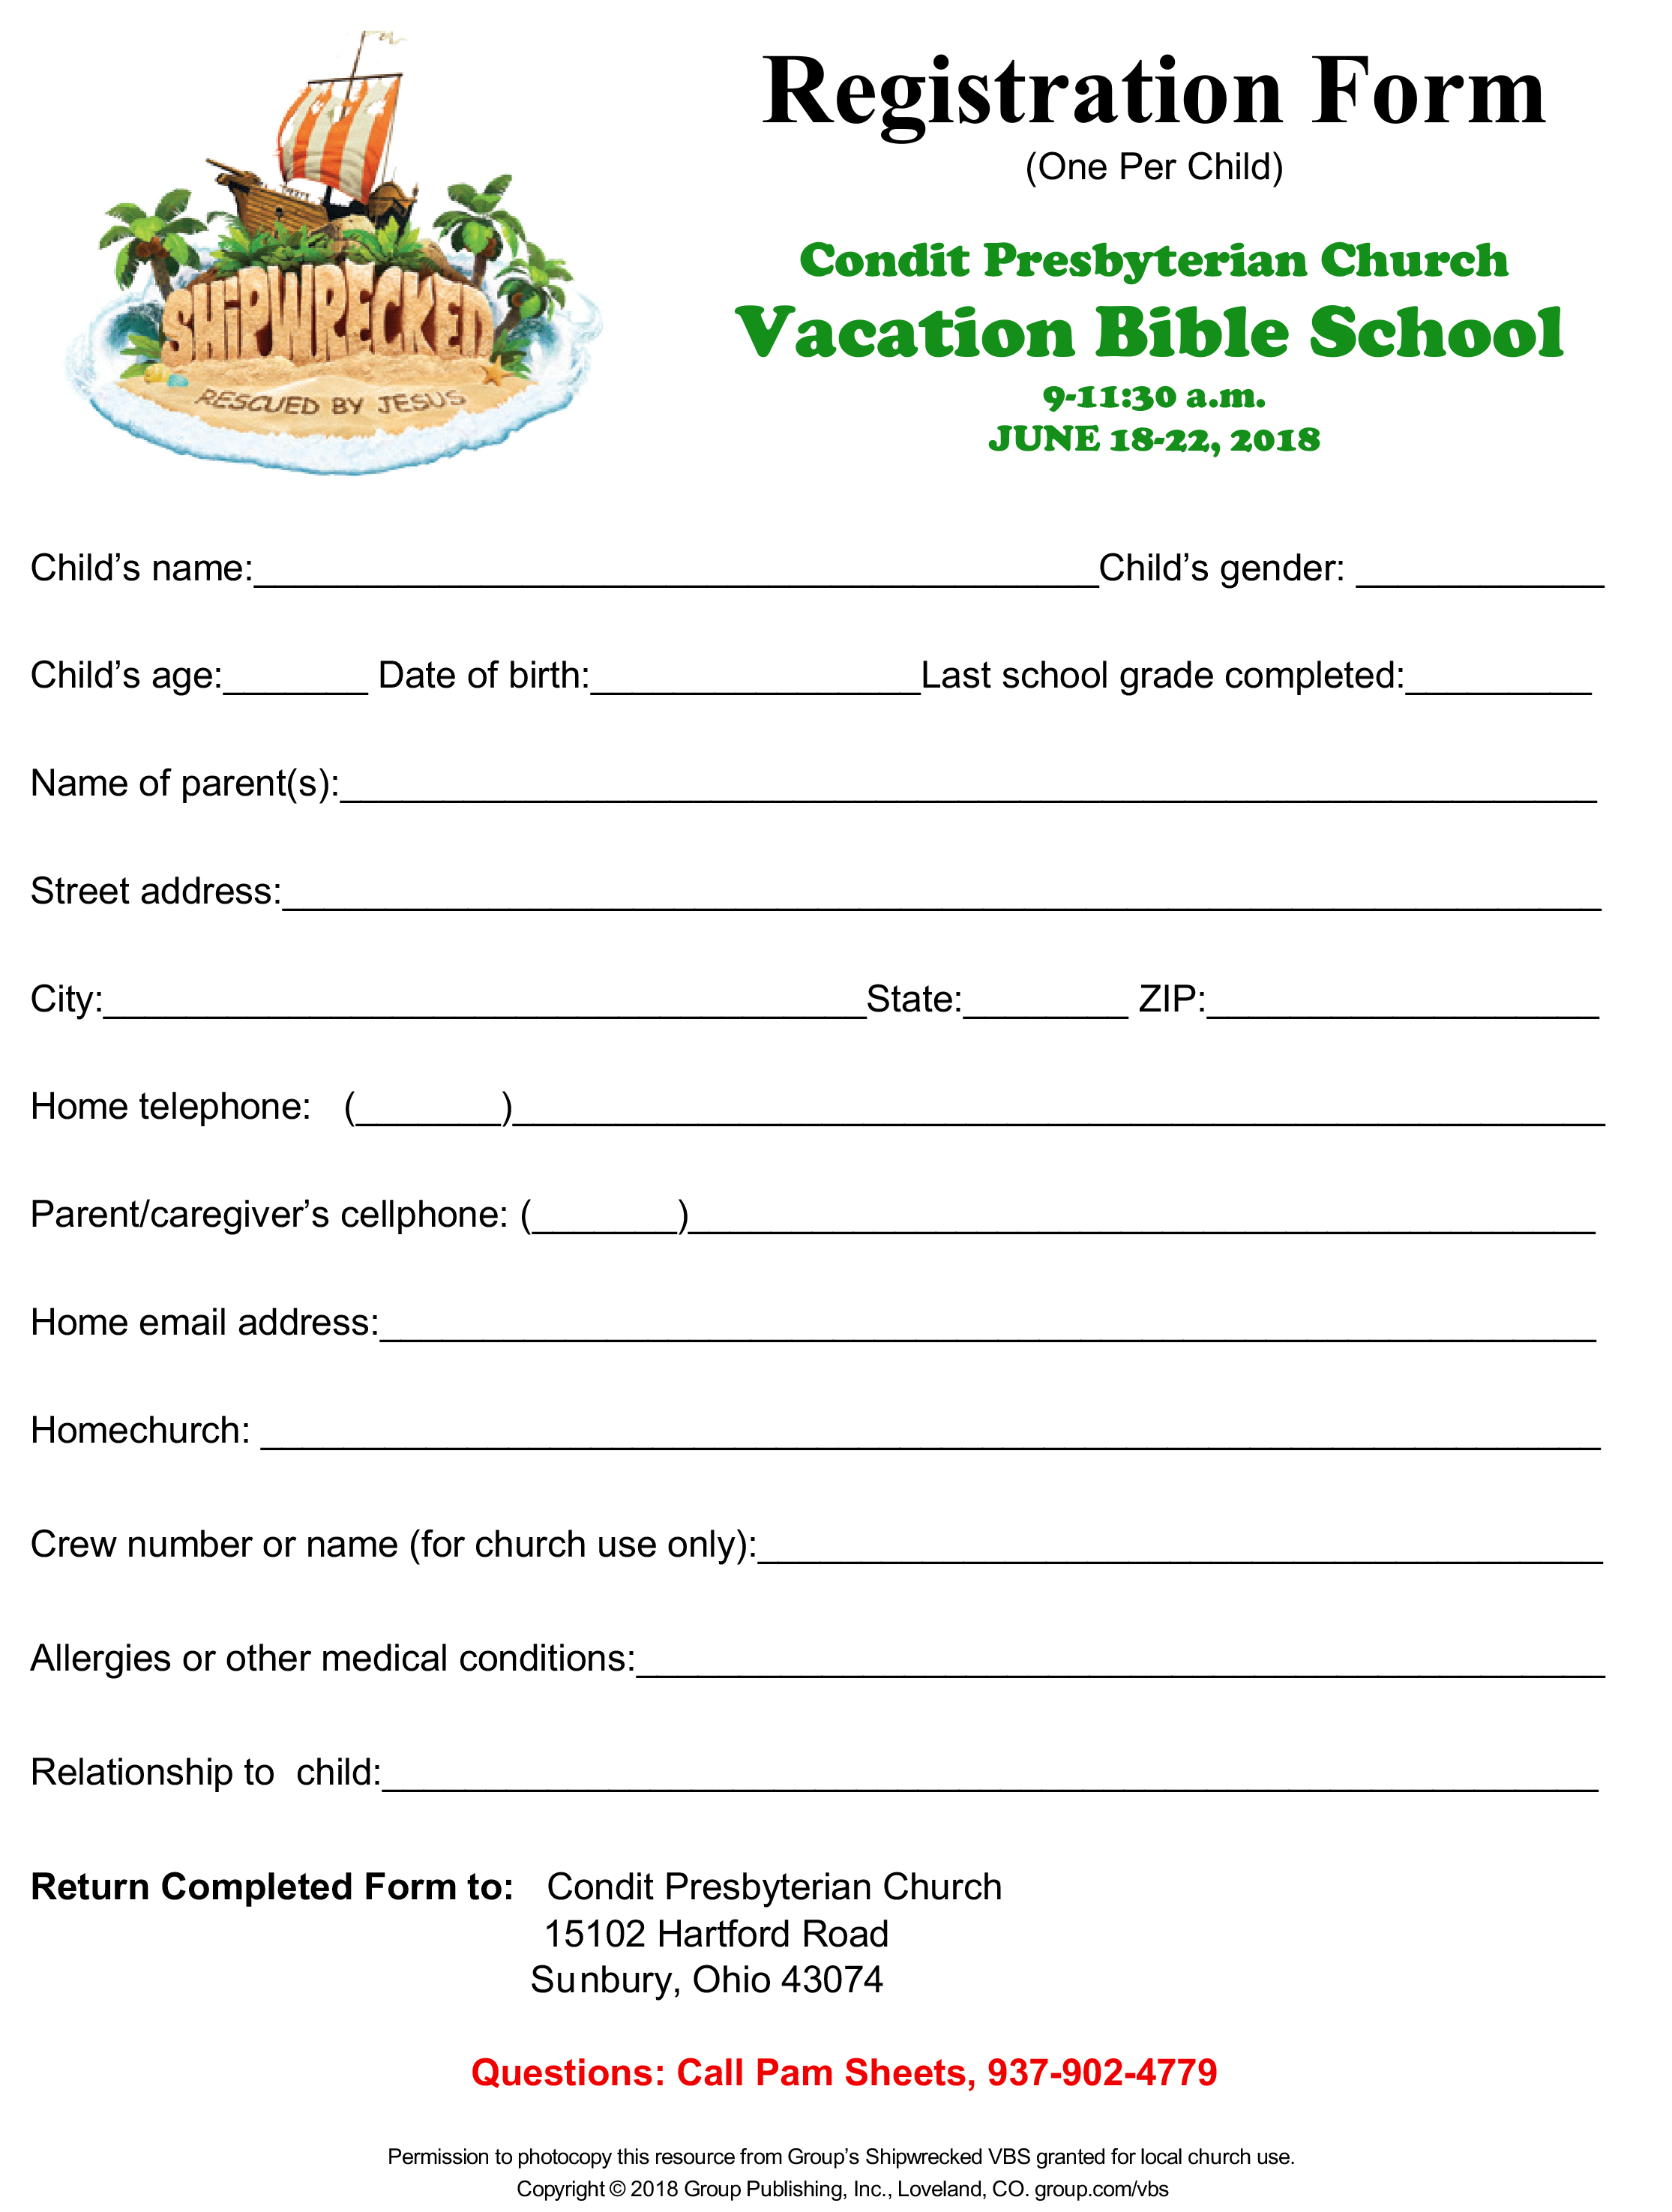 VBS Registration Form Condit Presbyterian Church Sunbury, OH